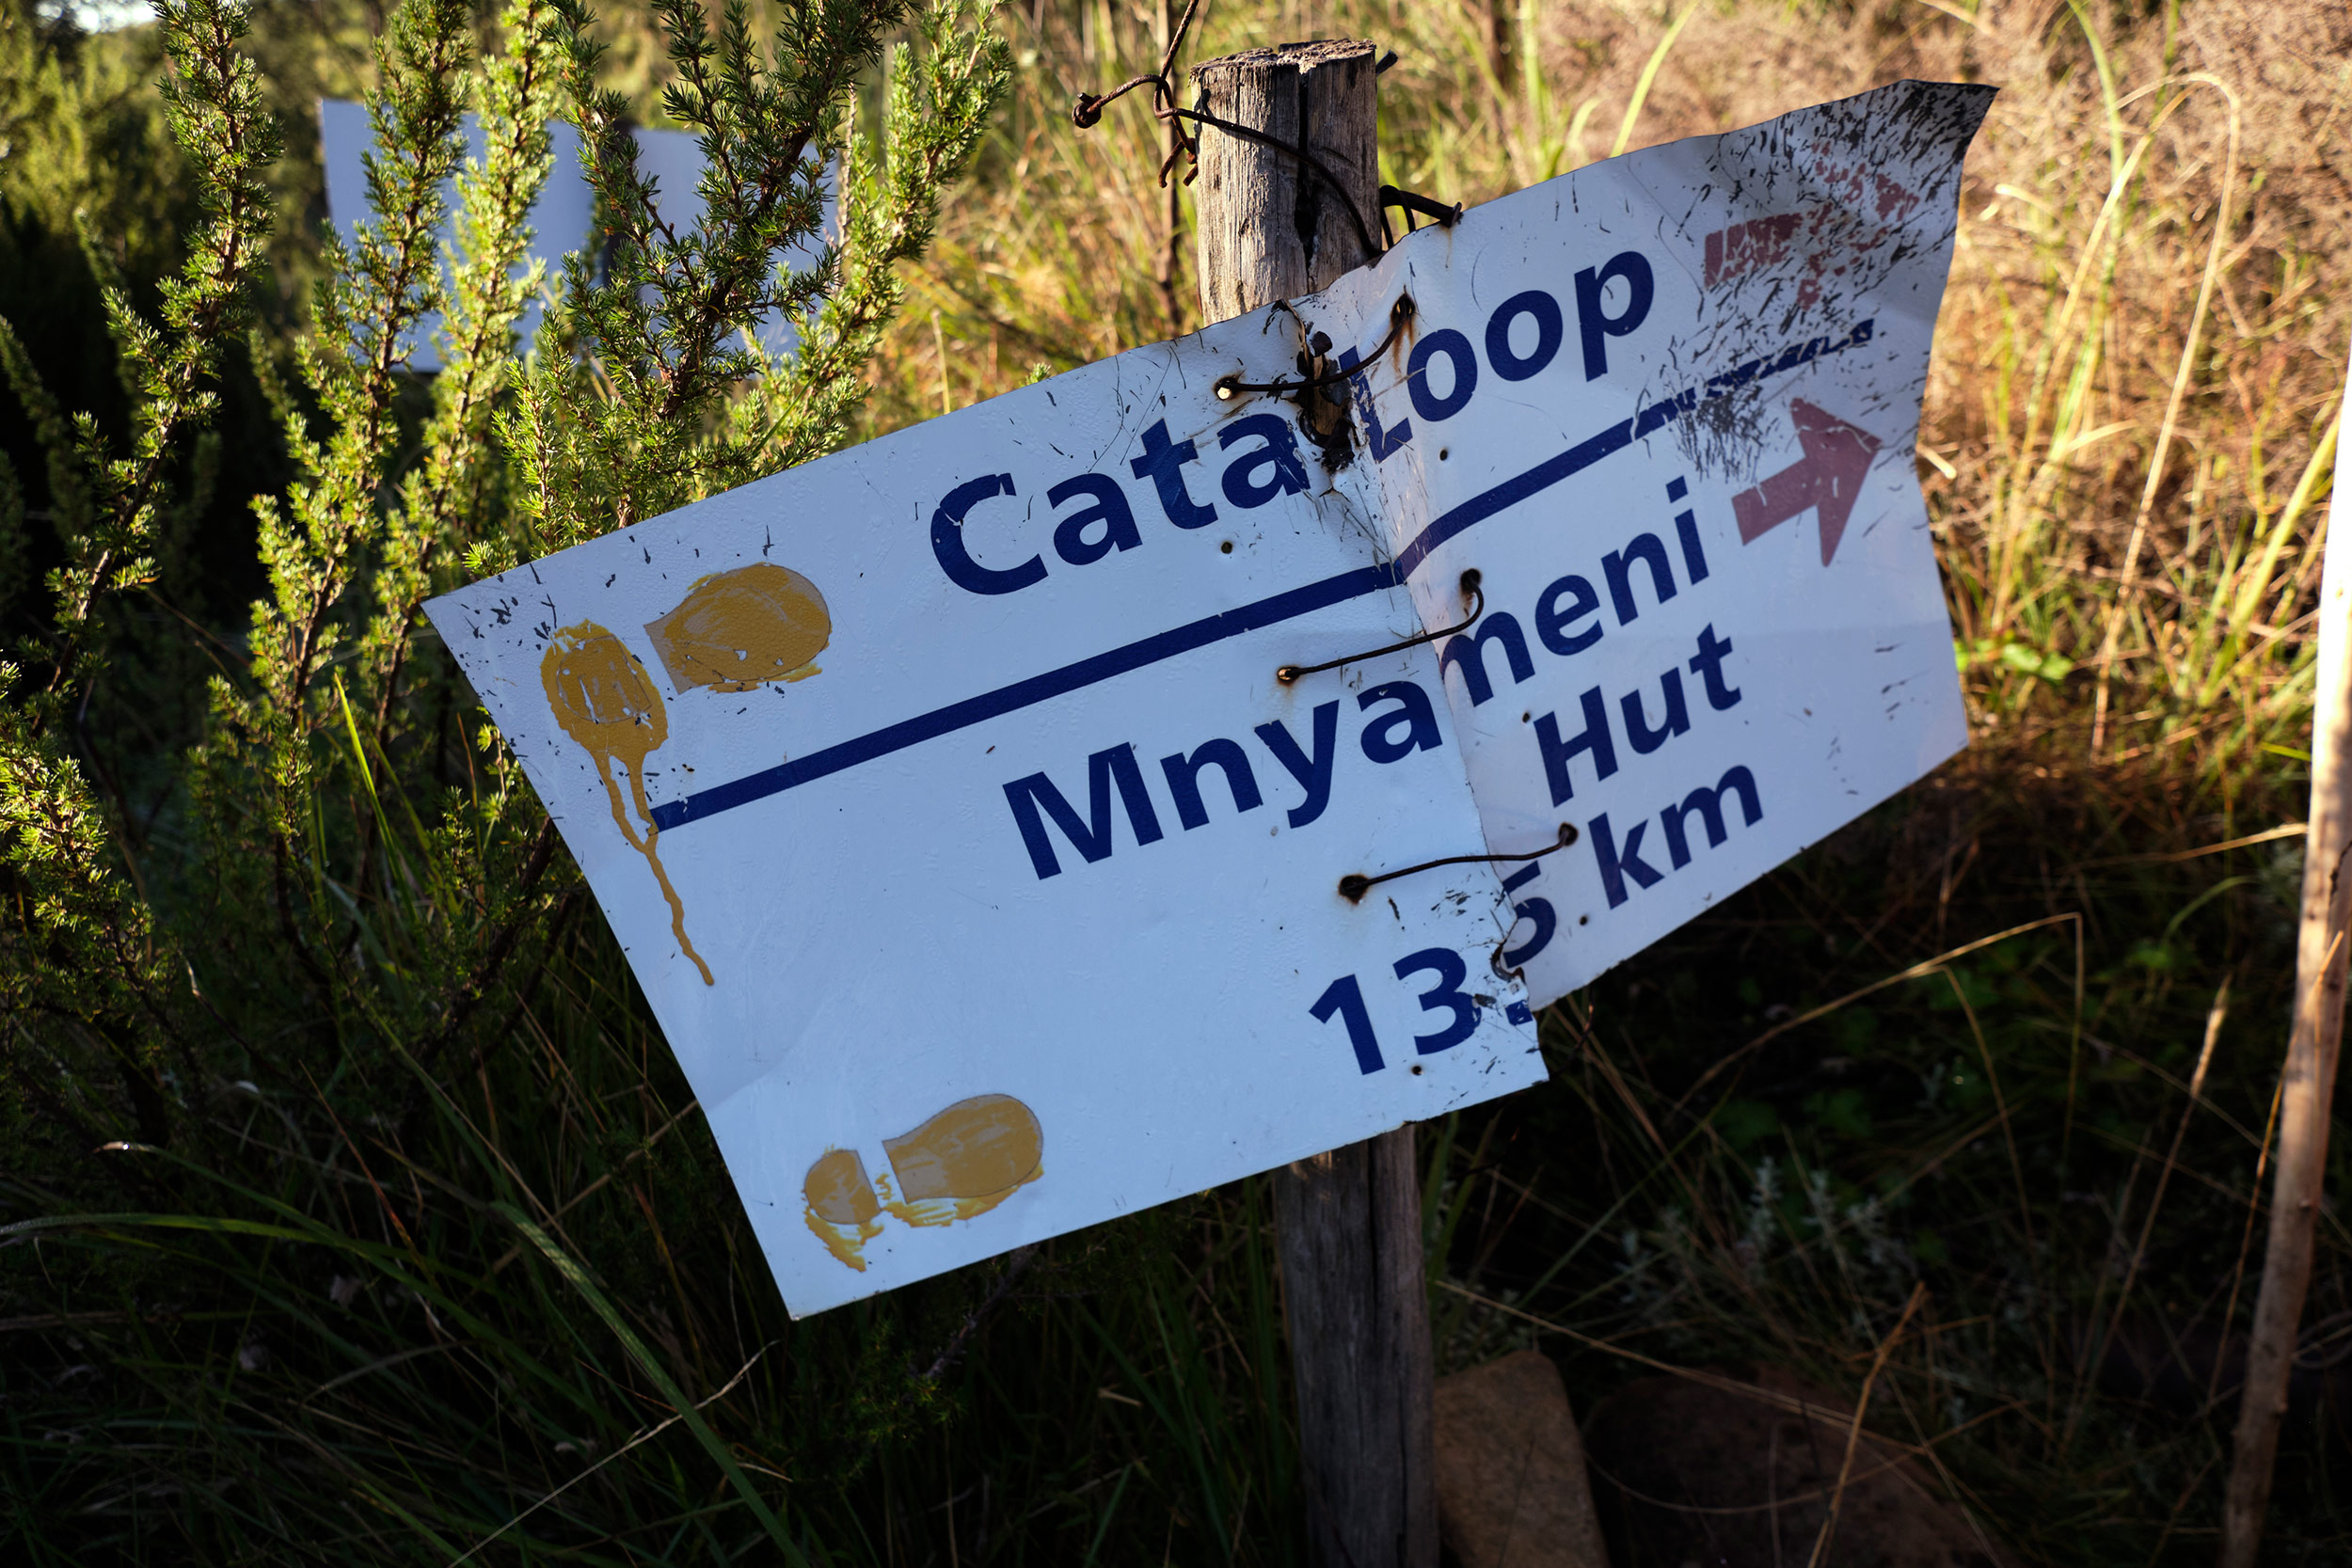 Amatola Trail South Africa Hiking Eastern Cape Hogsback